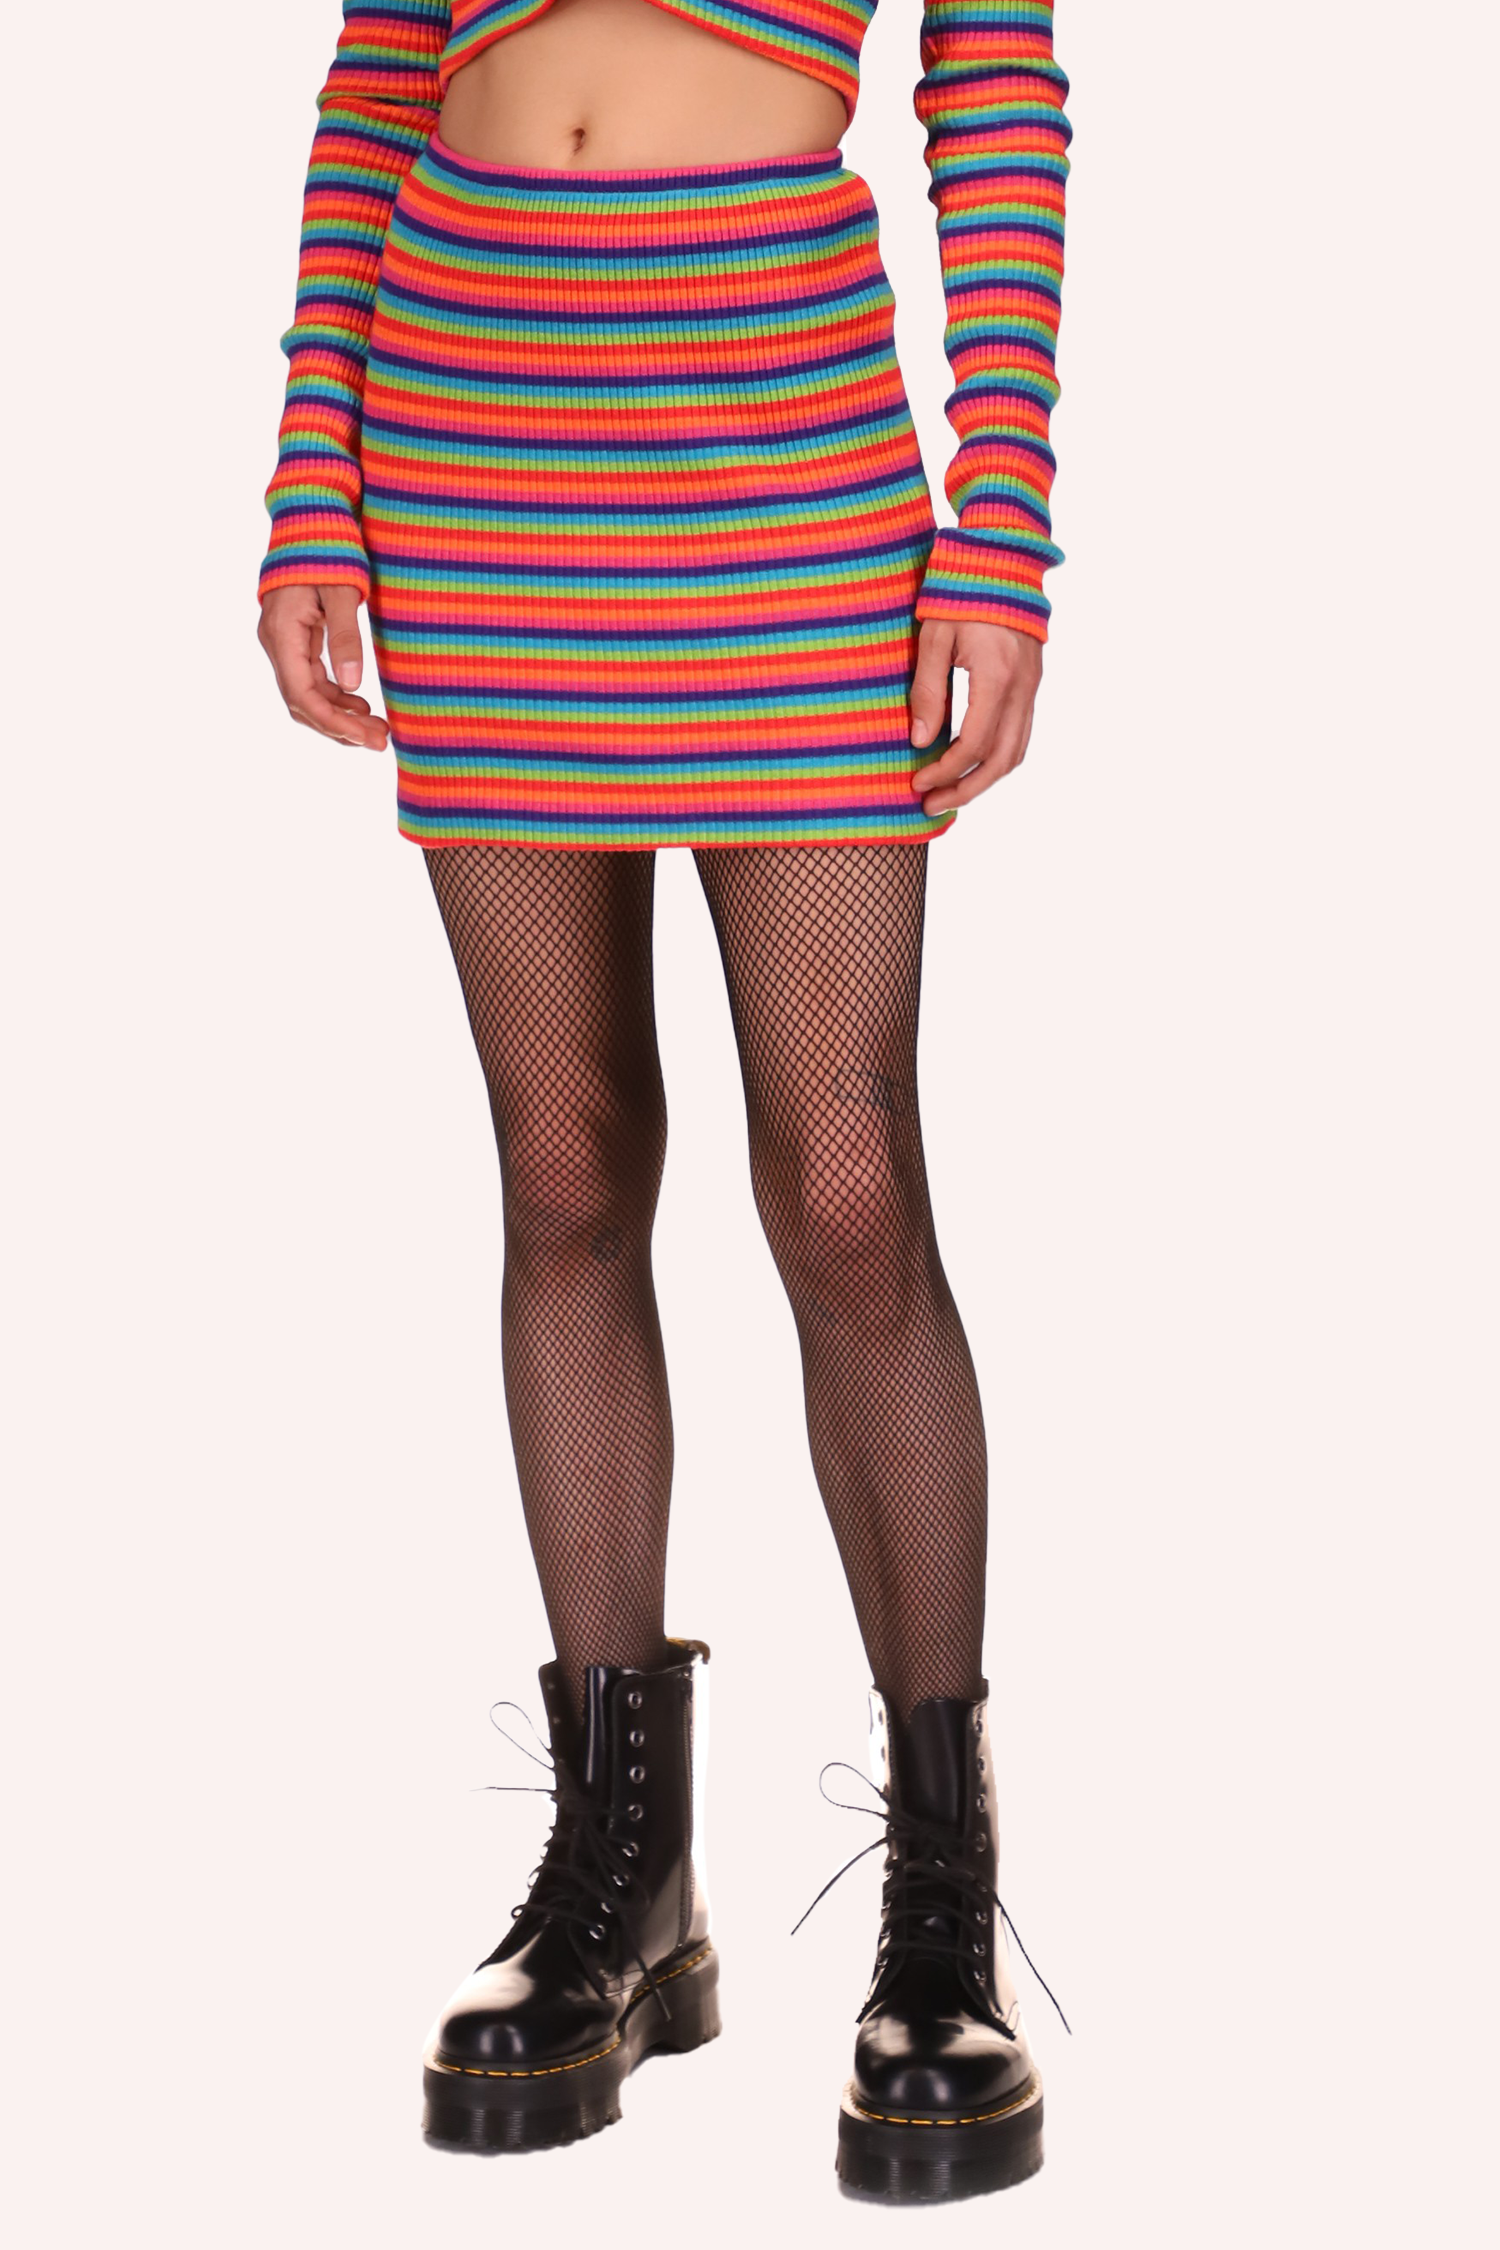 Rainbow Stripe Mini Skirt repetitive line of dark blue, light blue, green, orange, light orange & pink